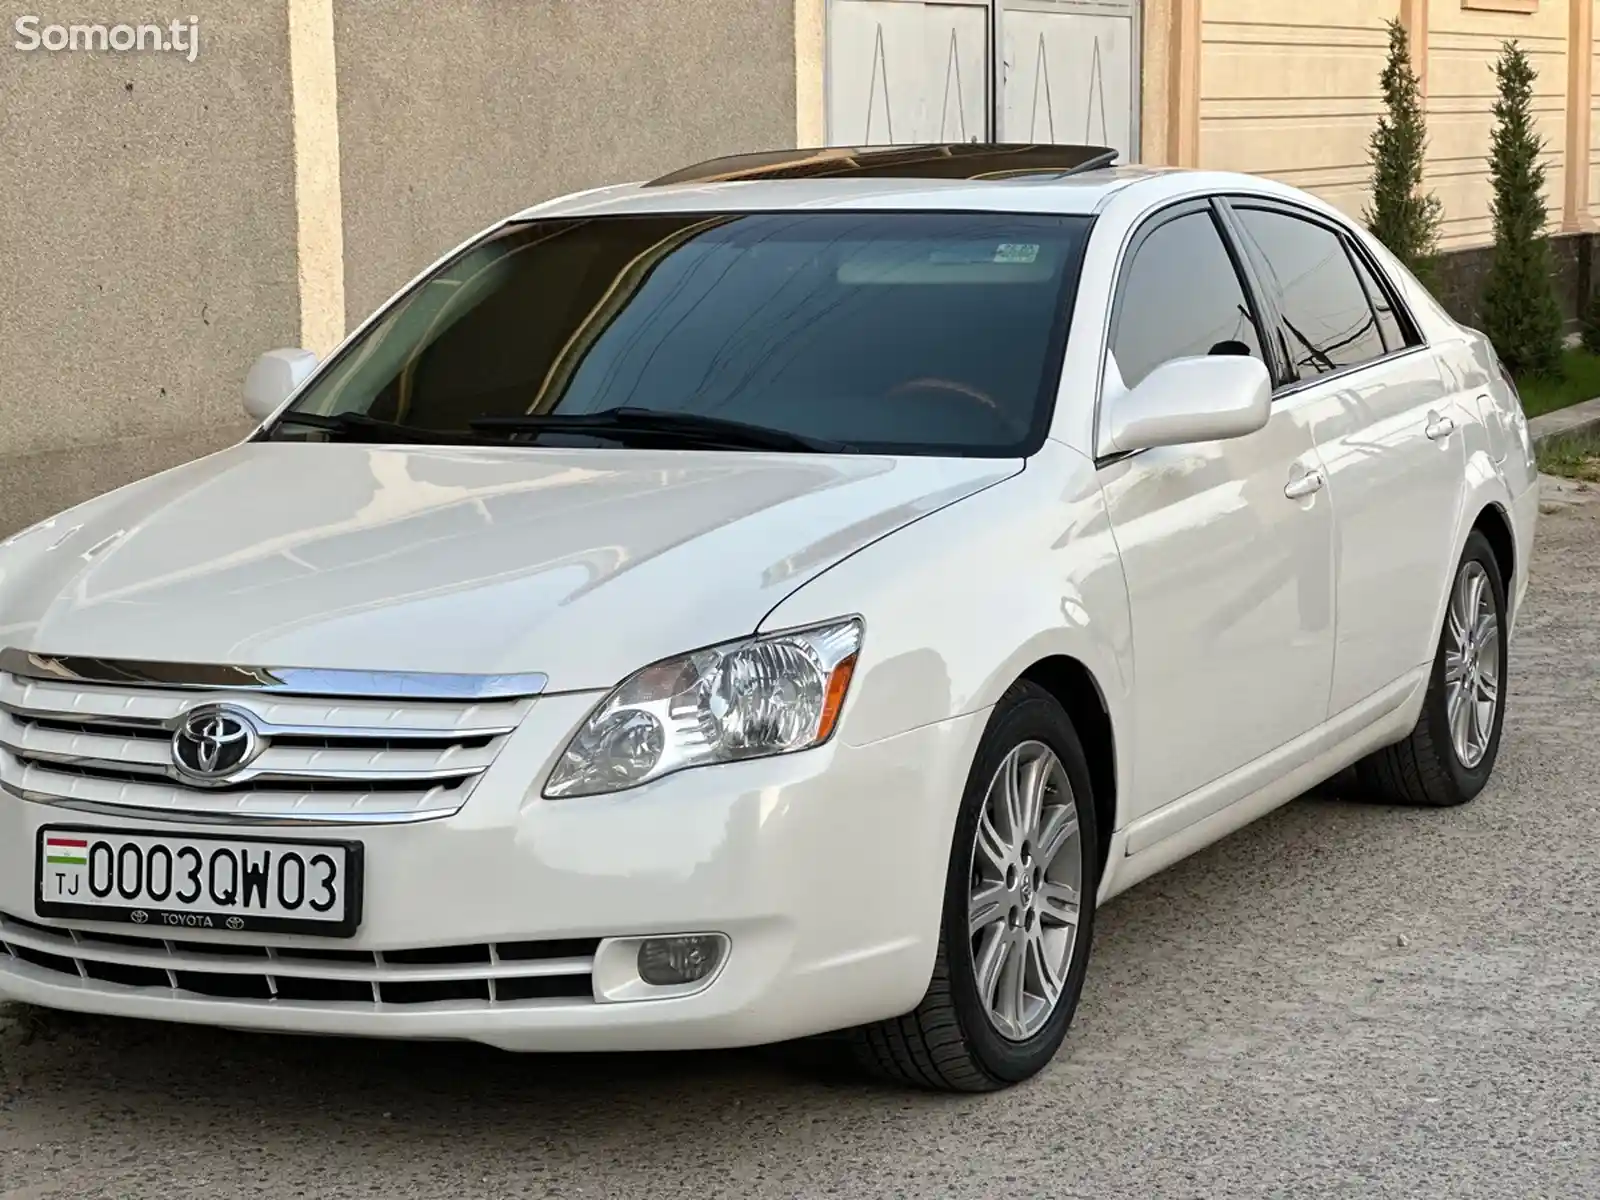 Toyota Avalon, 2007-2